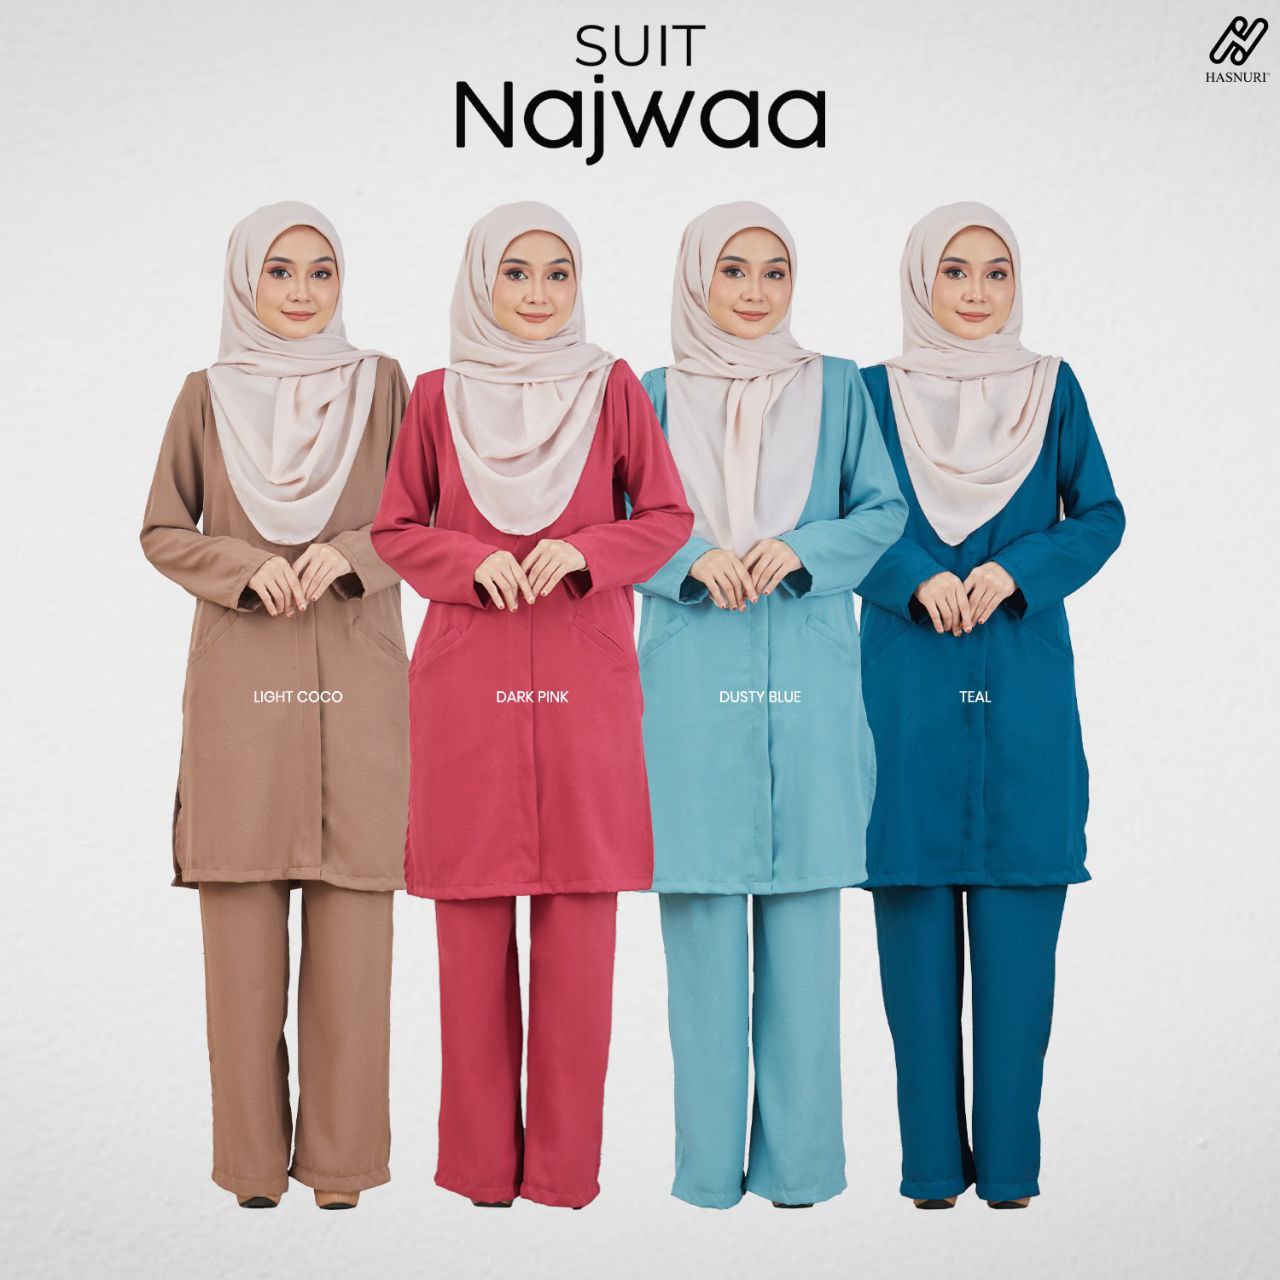 Suit Najwaa - Dark Pink